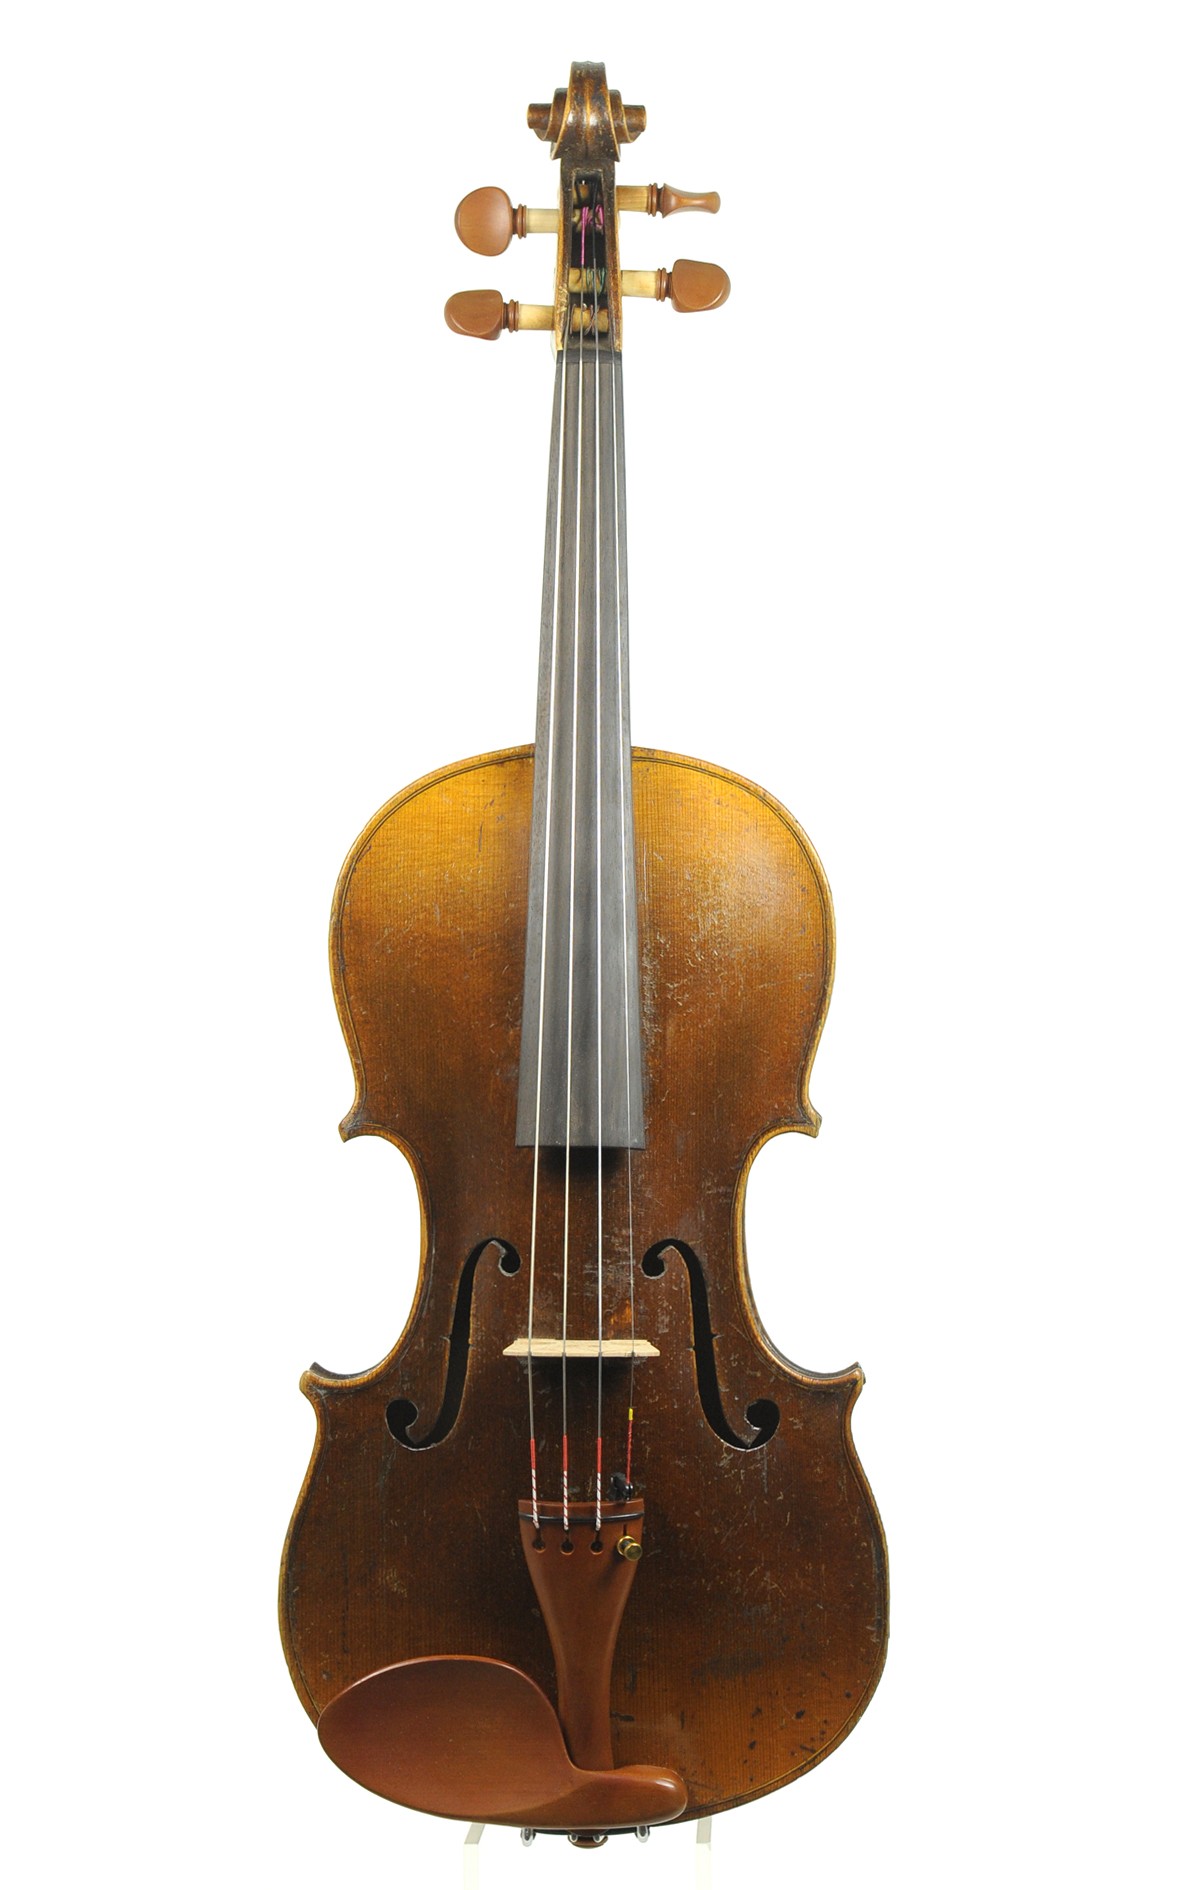 Antique Klingenthal violin, approx. 1850 - top